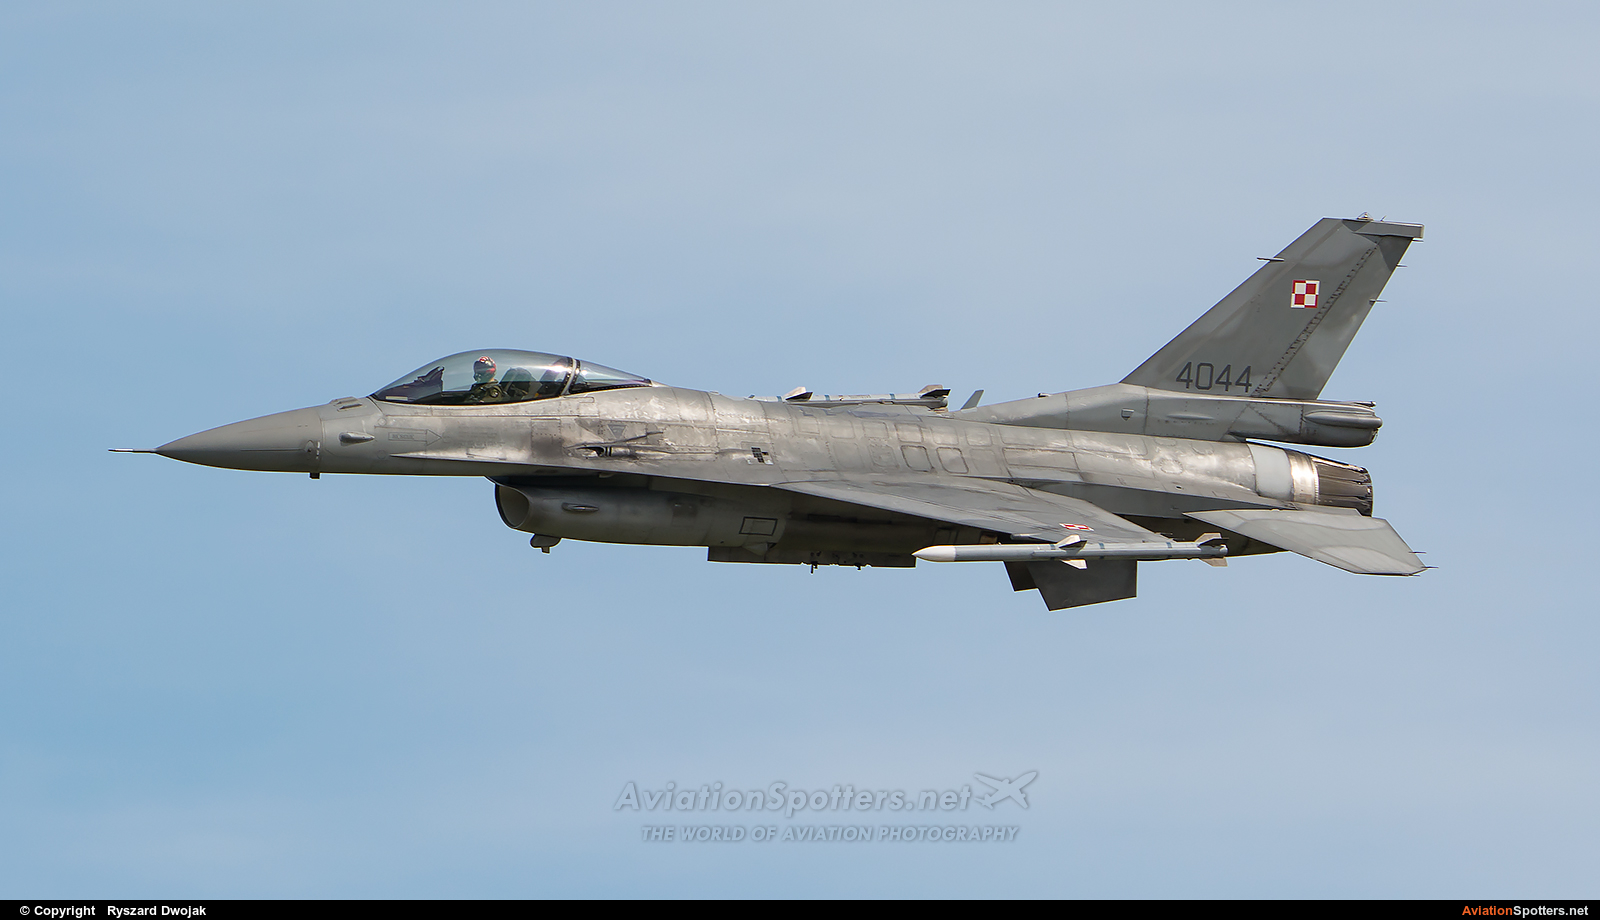 Poland - Air Force  -  F-16C Block 52+ Fighting Falcon  (4044) By Ryszard Dwojak (ryś)